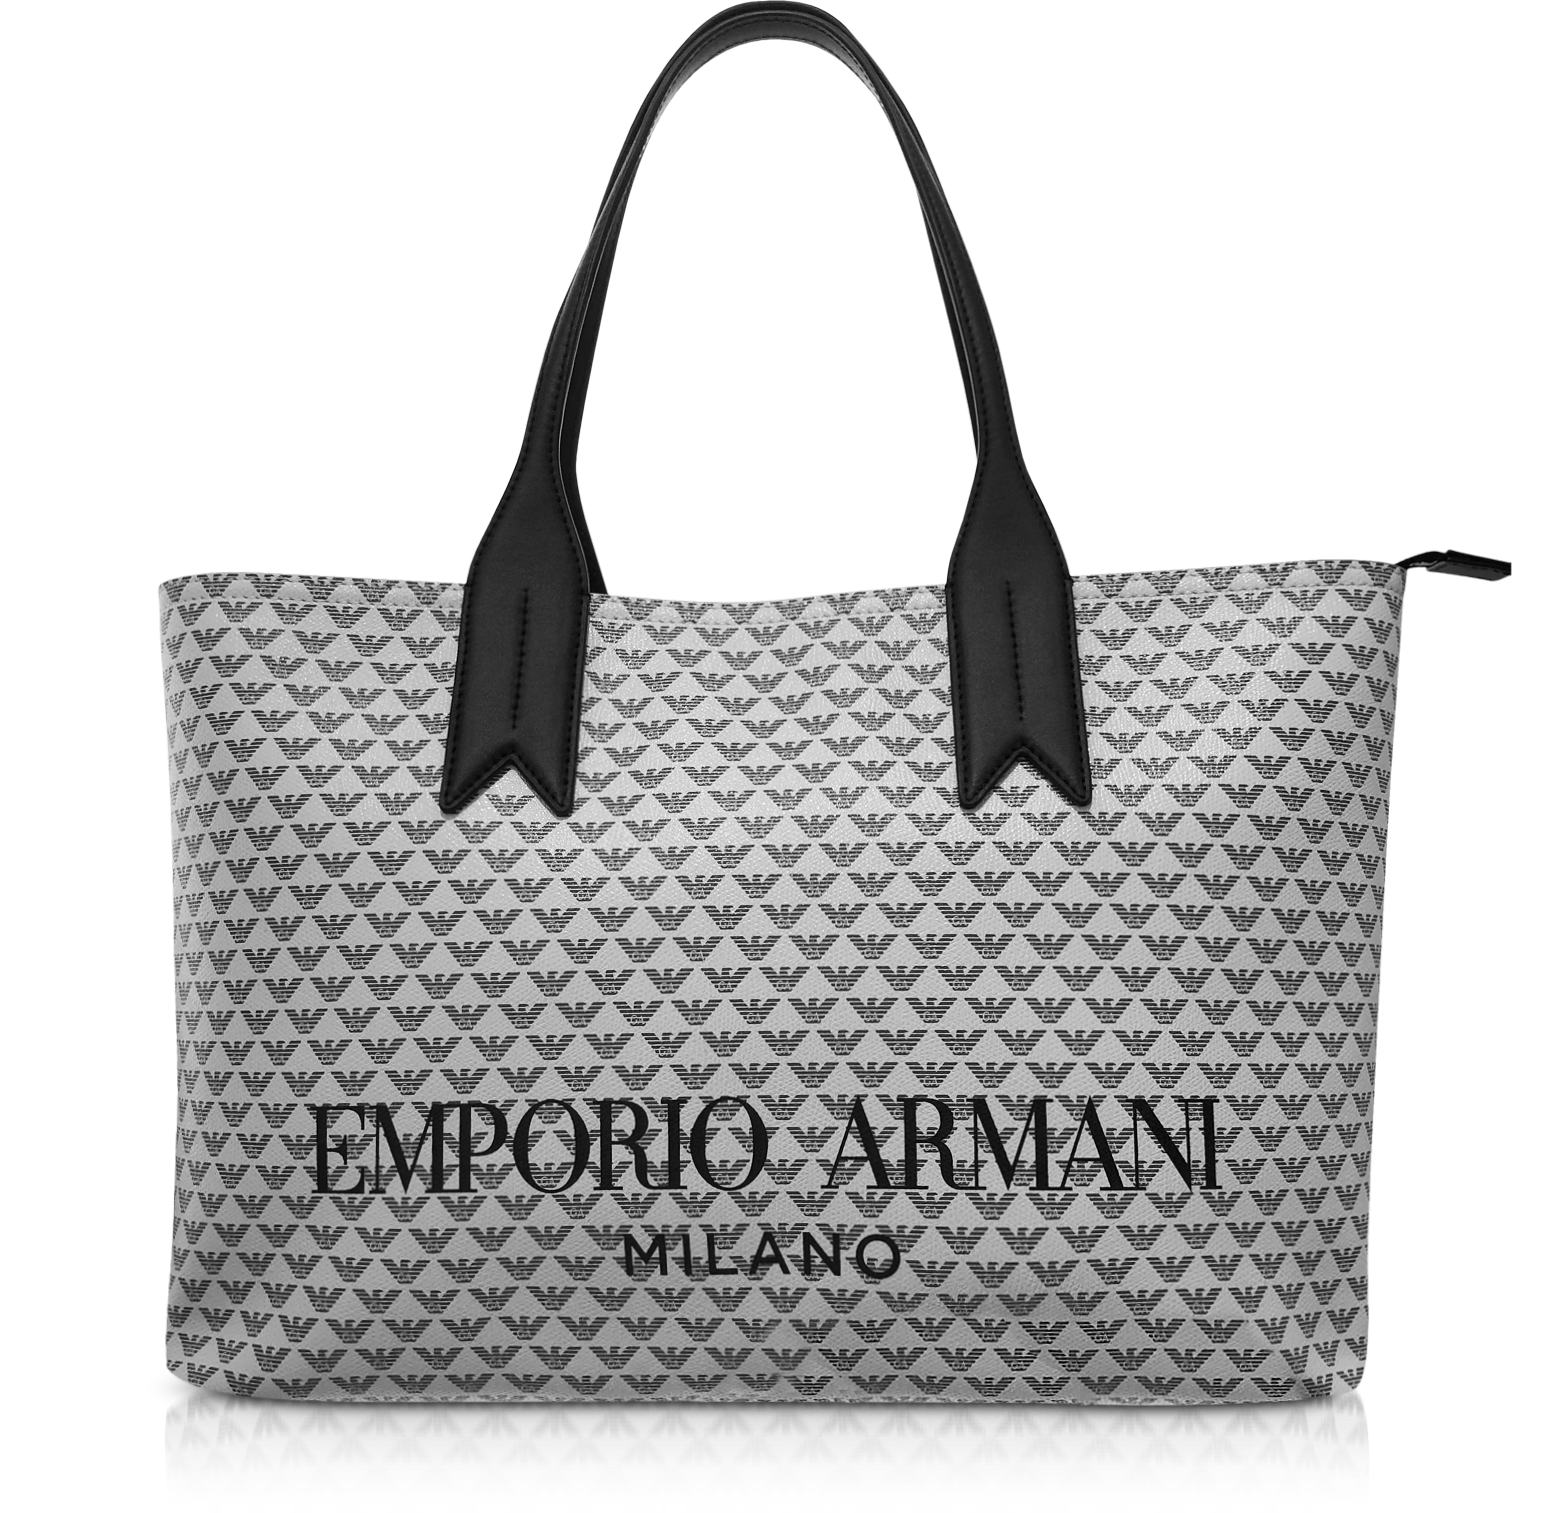 black armani tote bag